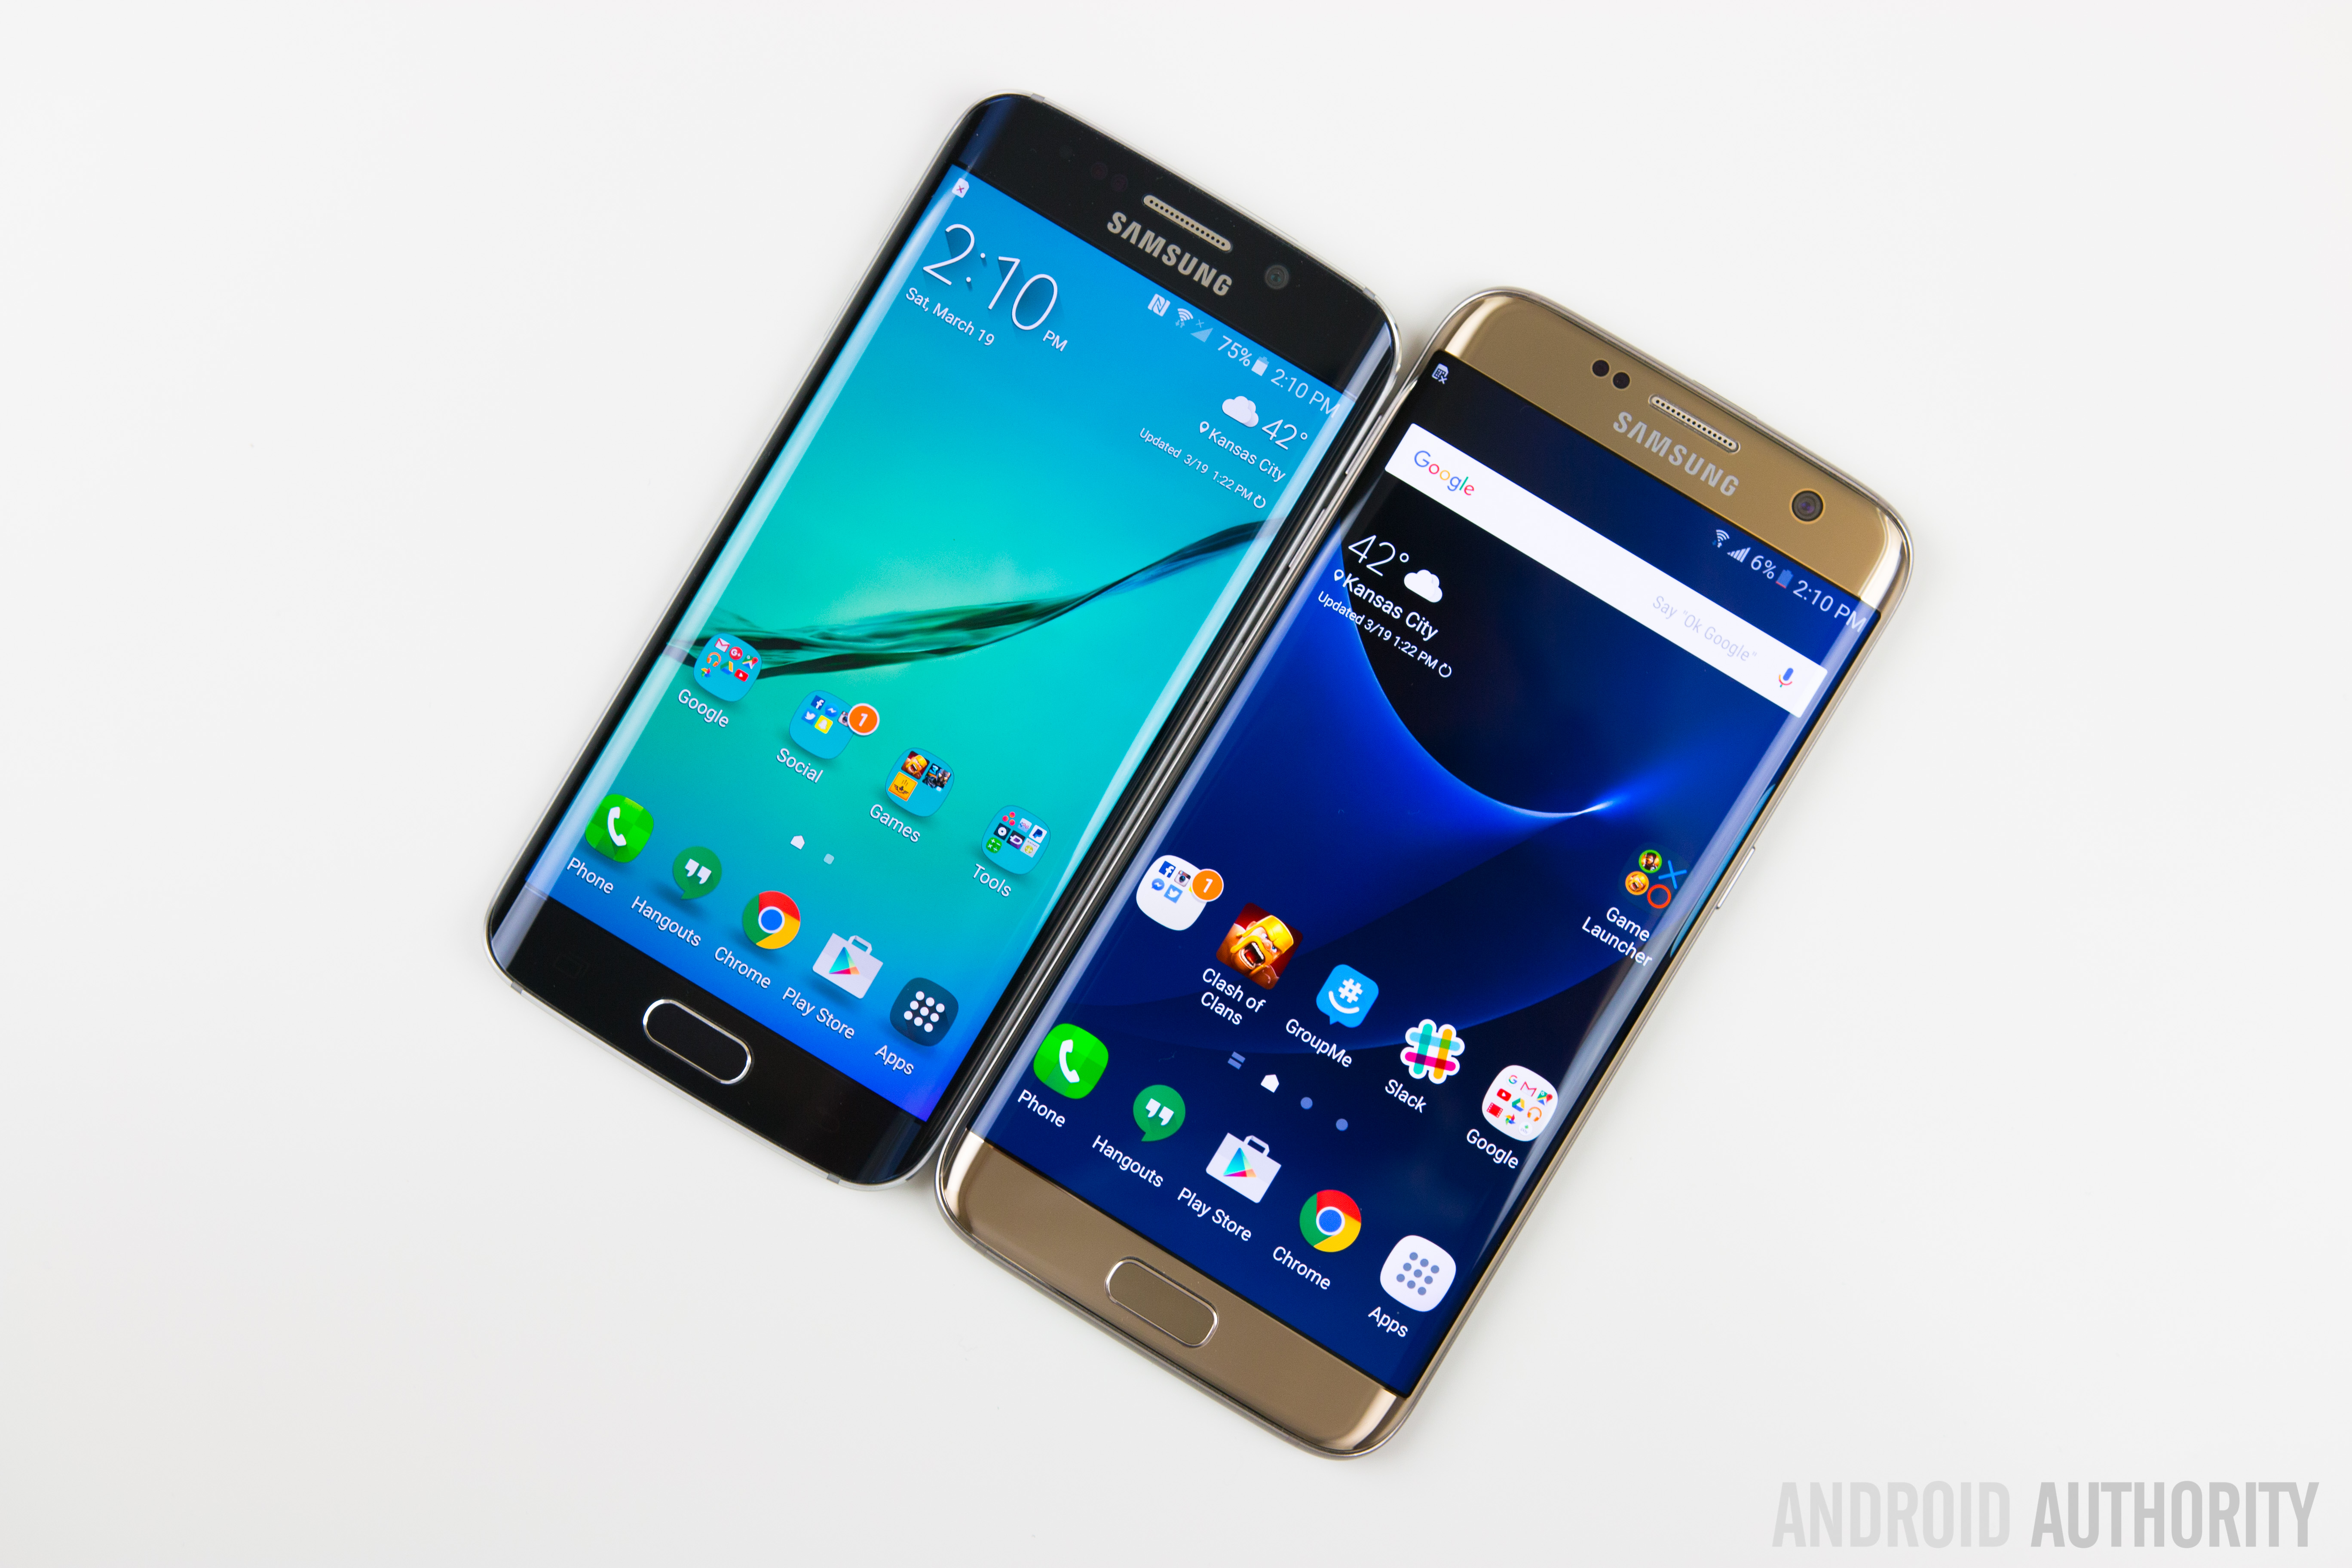 Samsung Galaxy S7 Edge S8